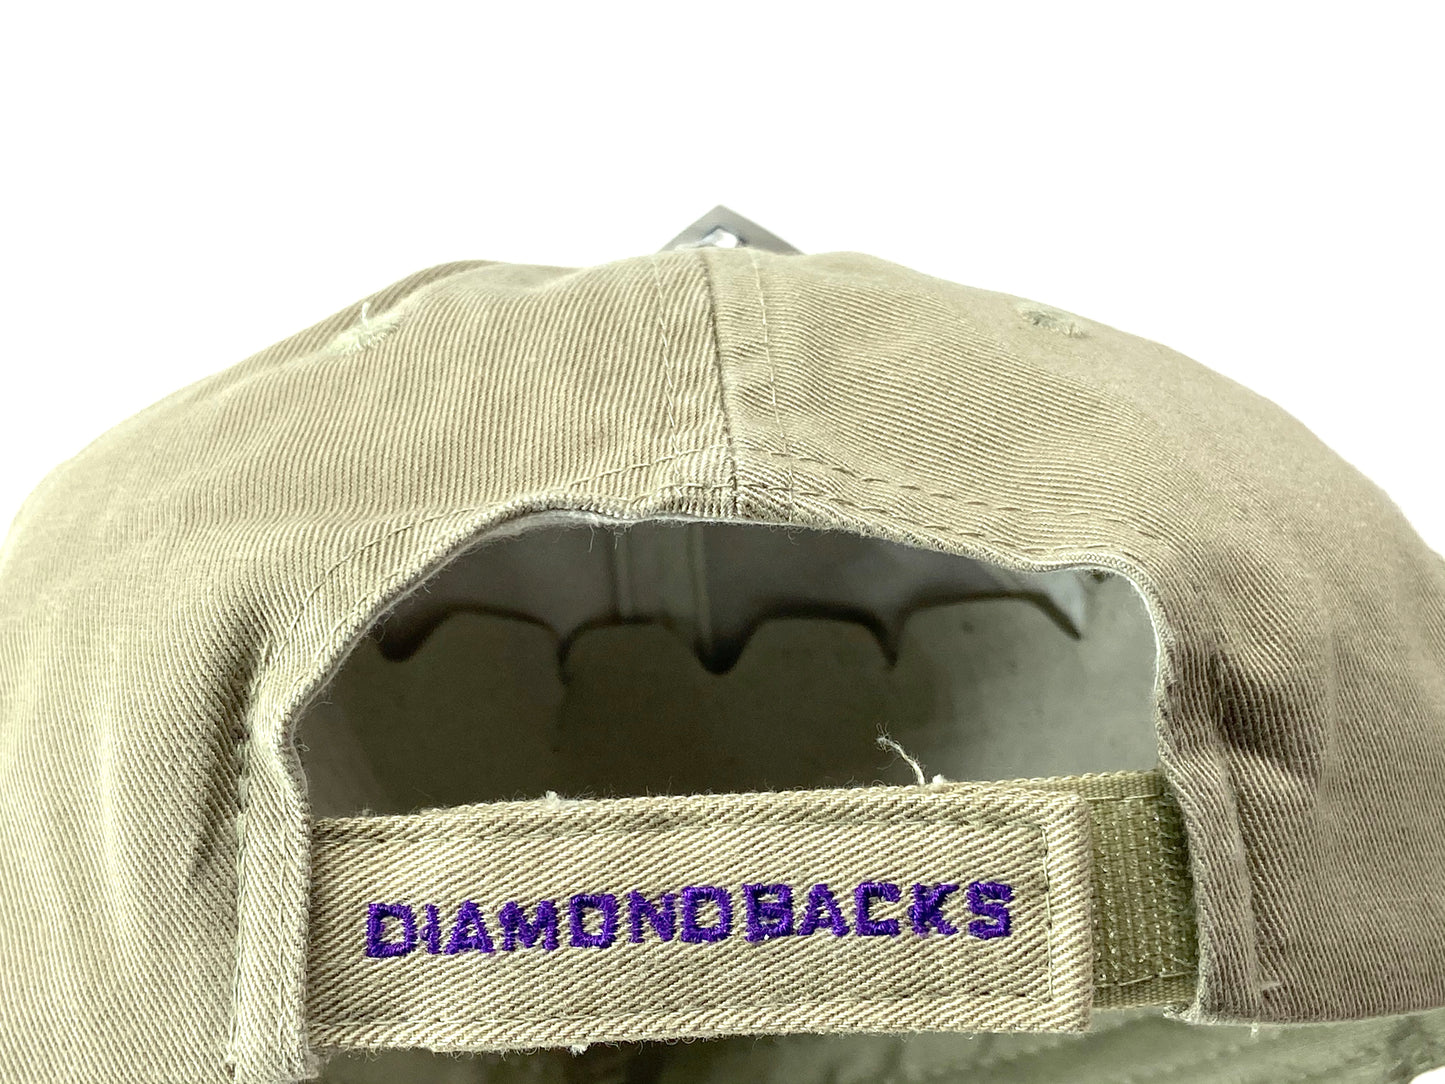 Arizona Diamondbacks Vintage MLB "Circle" Cap (New) by Drew Pearson Marketing